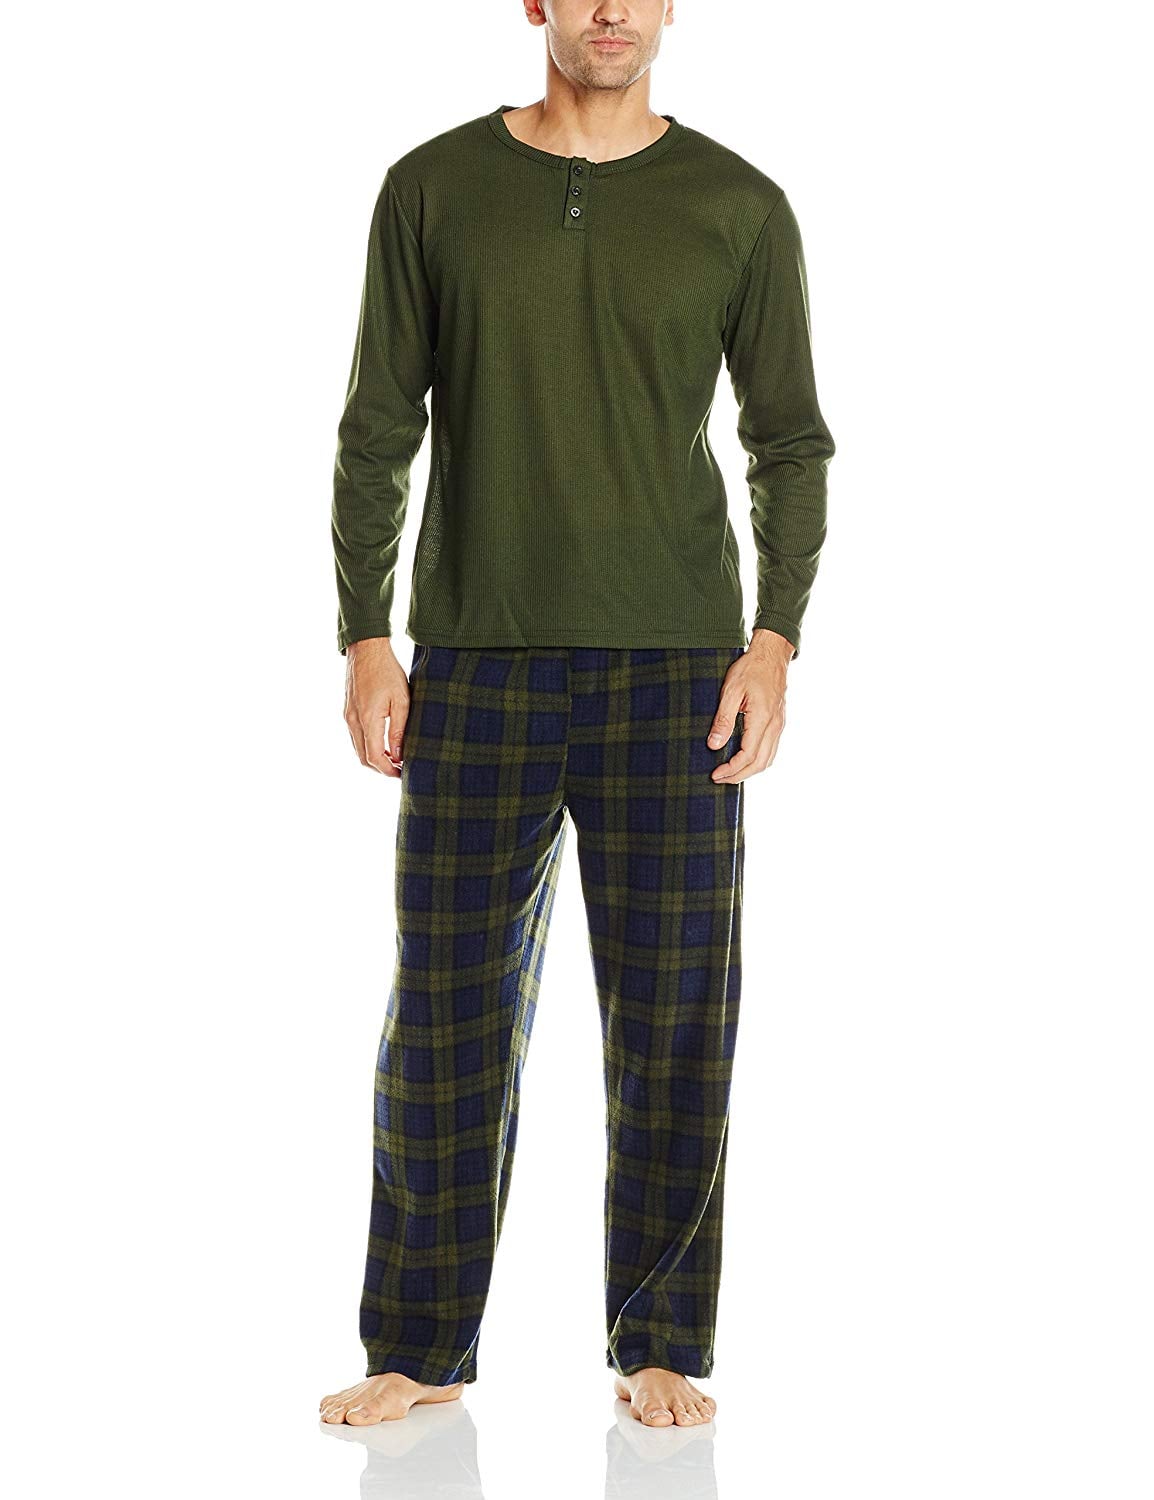 Essentials by Seven Apparel Herren-Pyjama-Set's Pajama Set